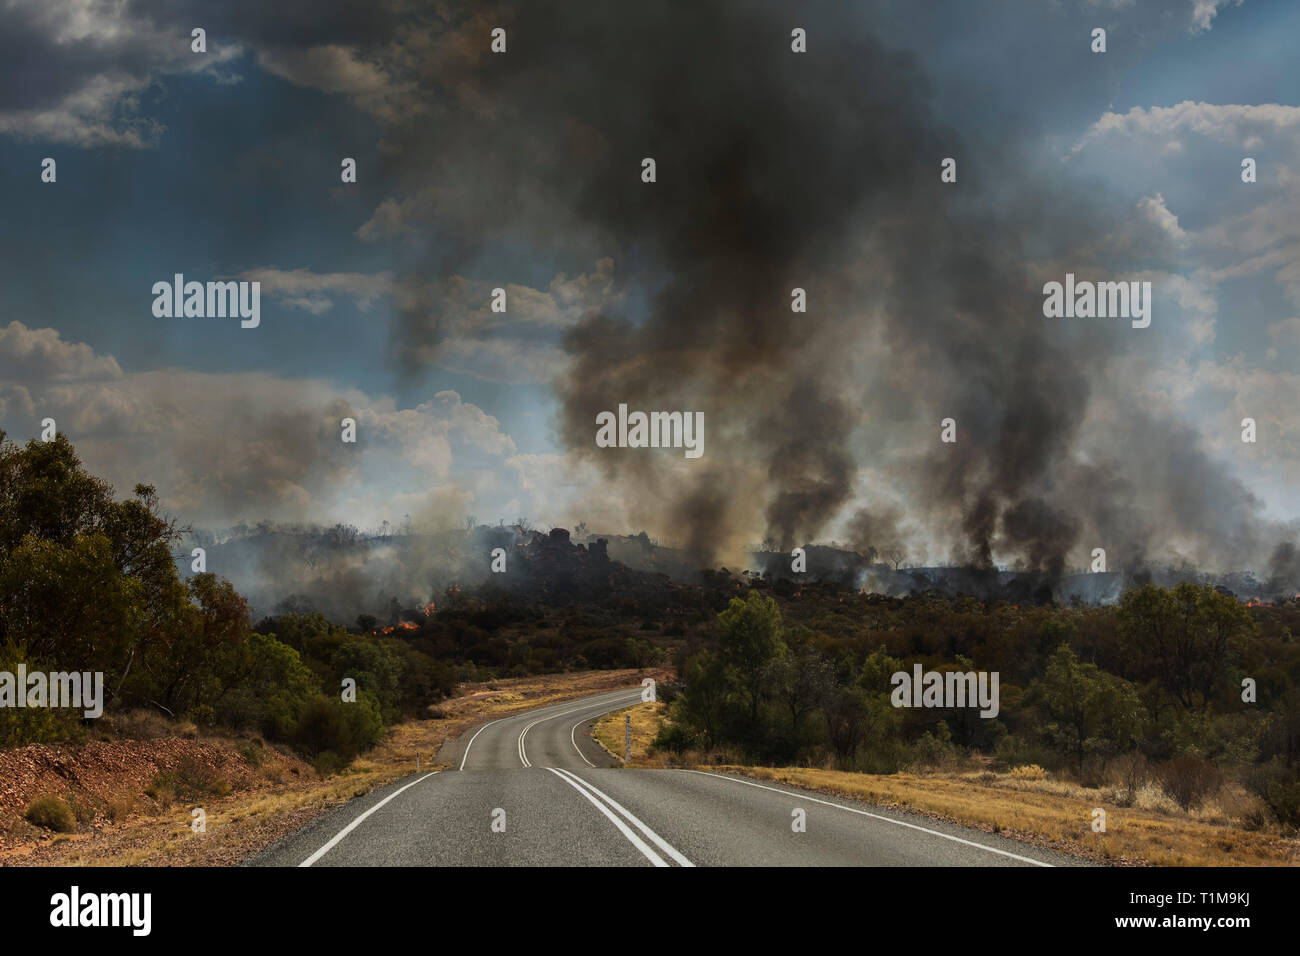 Waldbrände brennen in der Ferne Osten McDonnell Ranges, Alice Springs, Australien Stockfoto